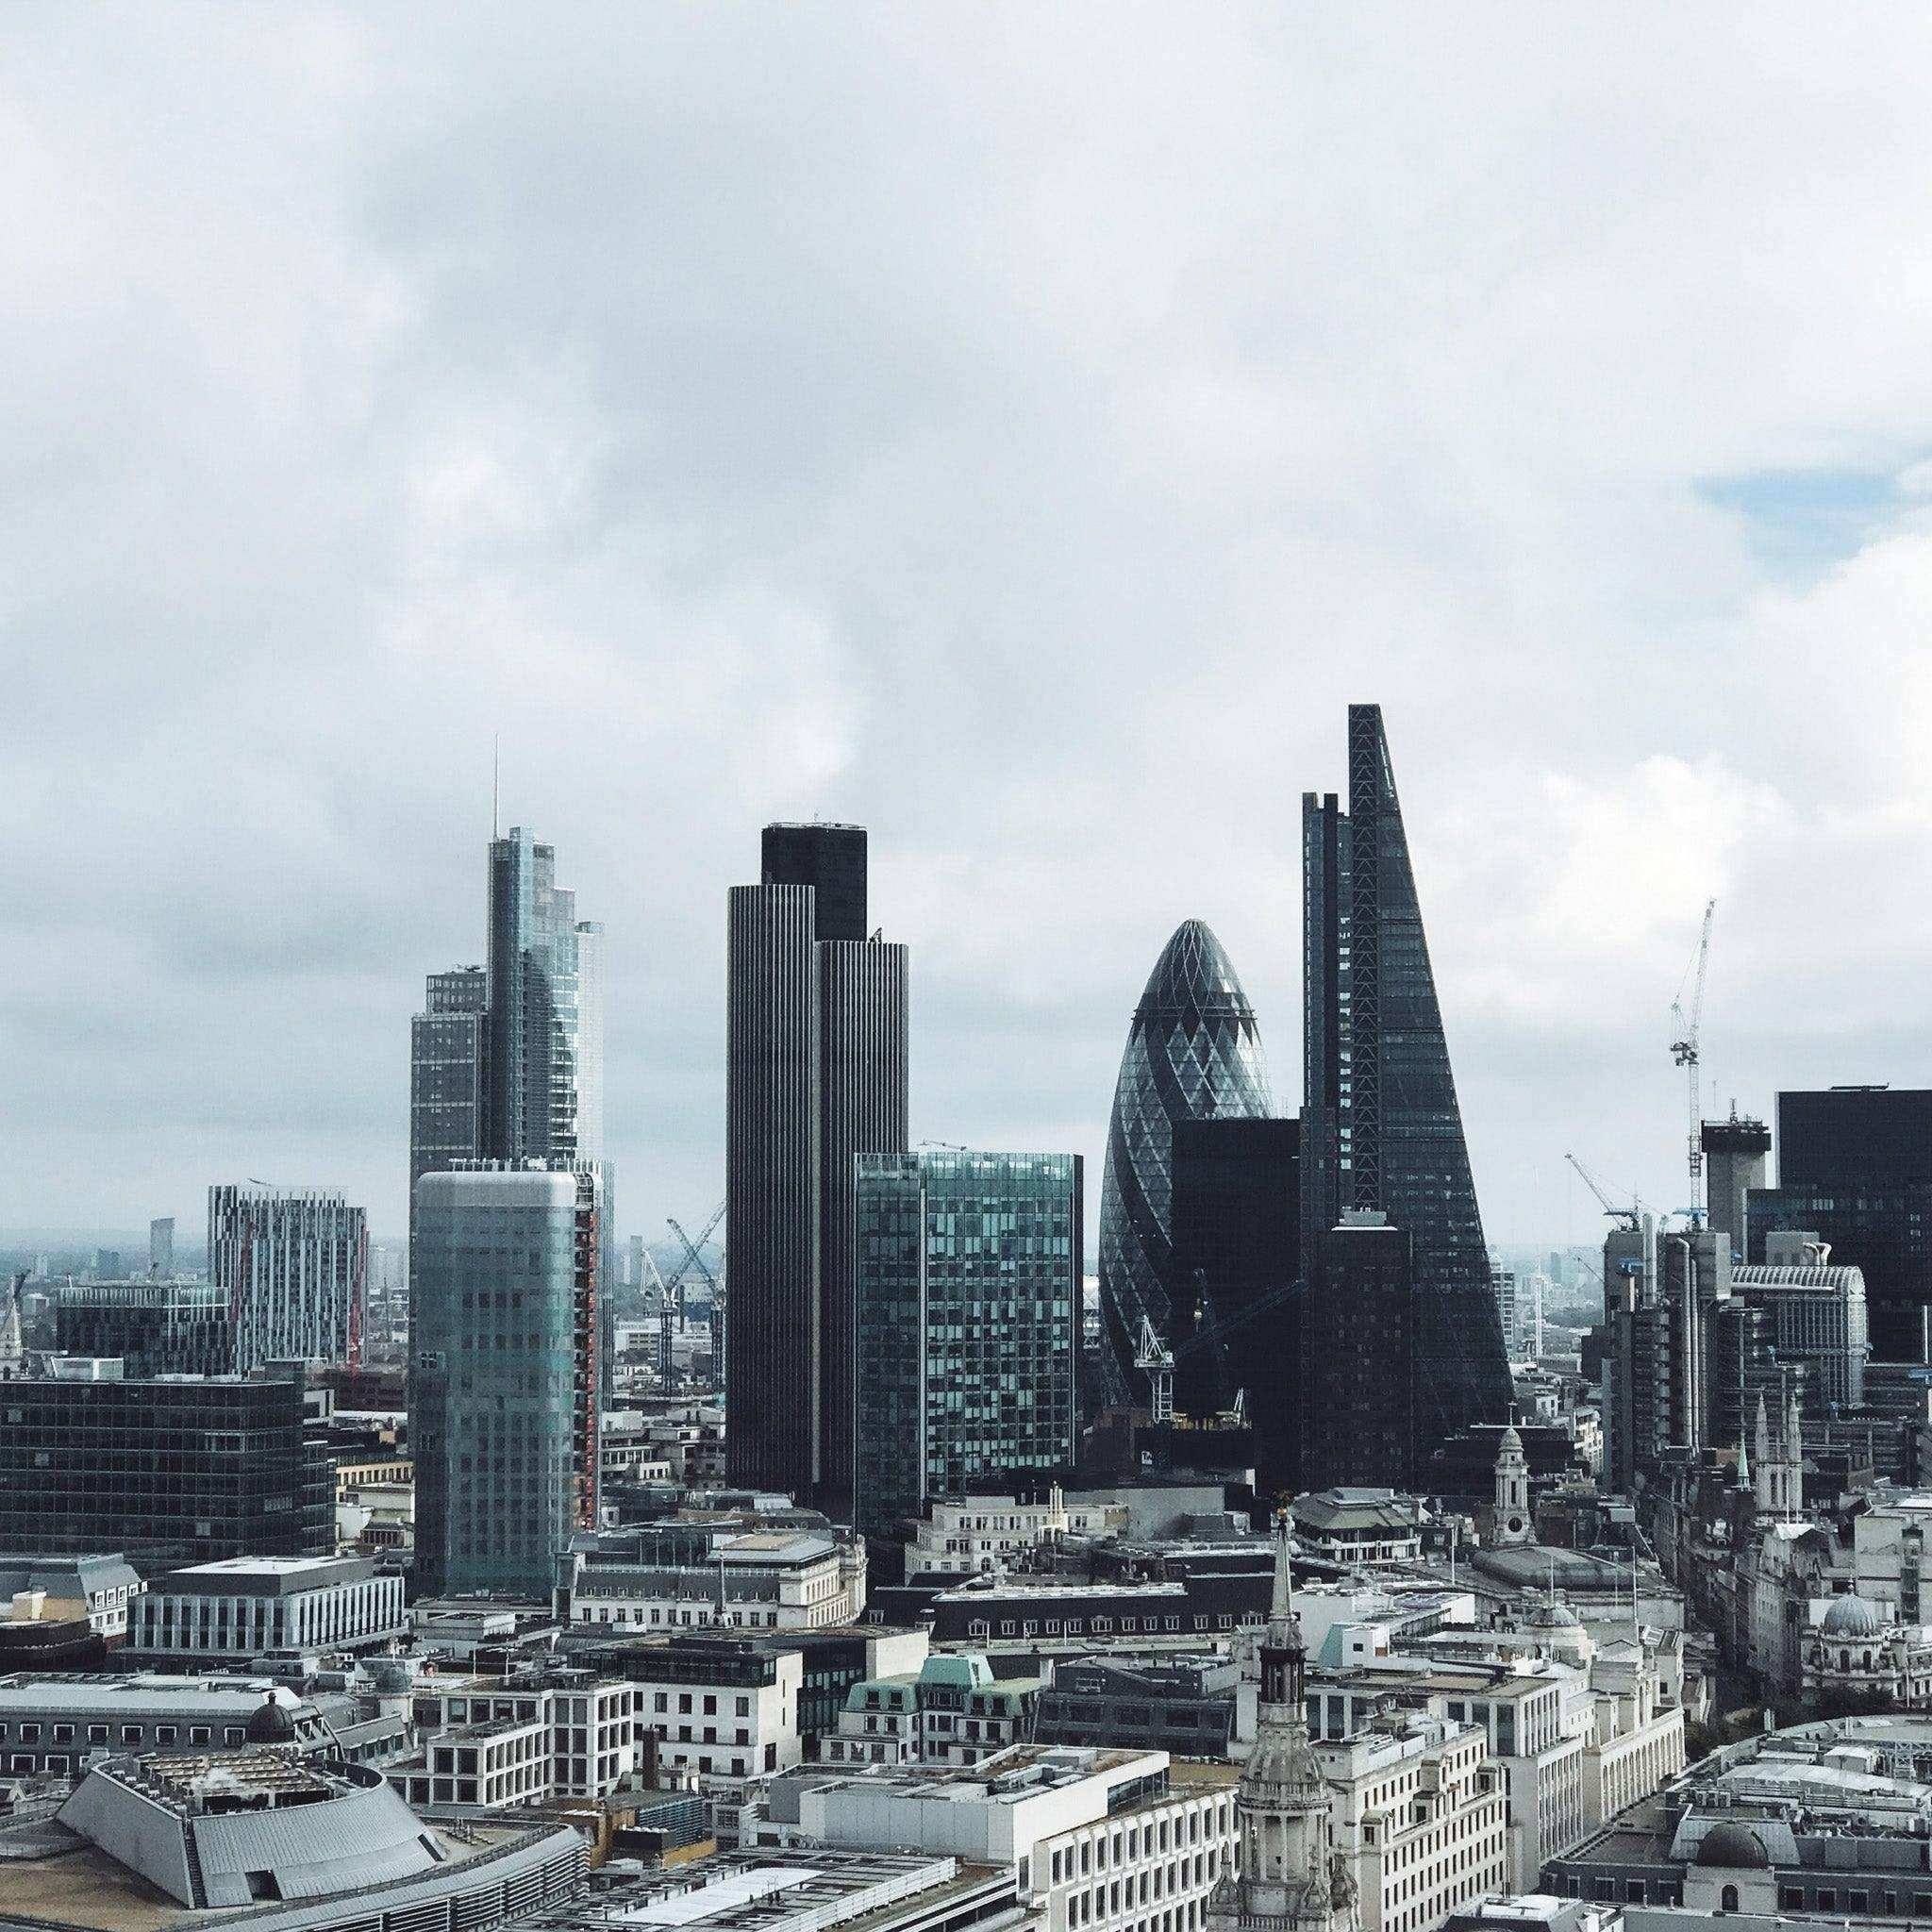 London 3D City Model - CITYFRAMES